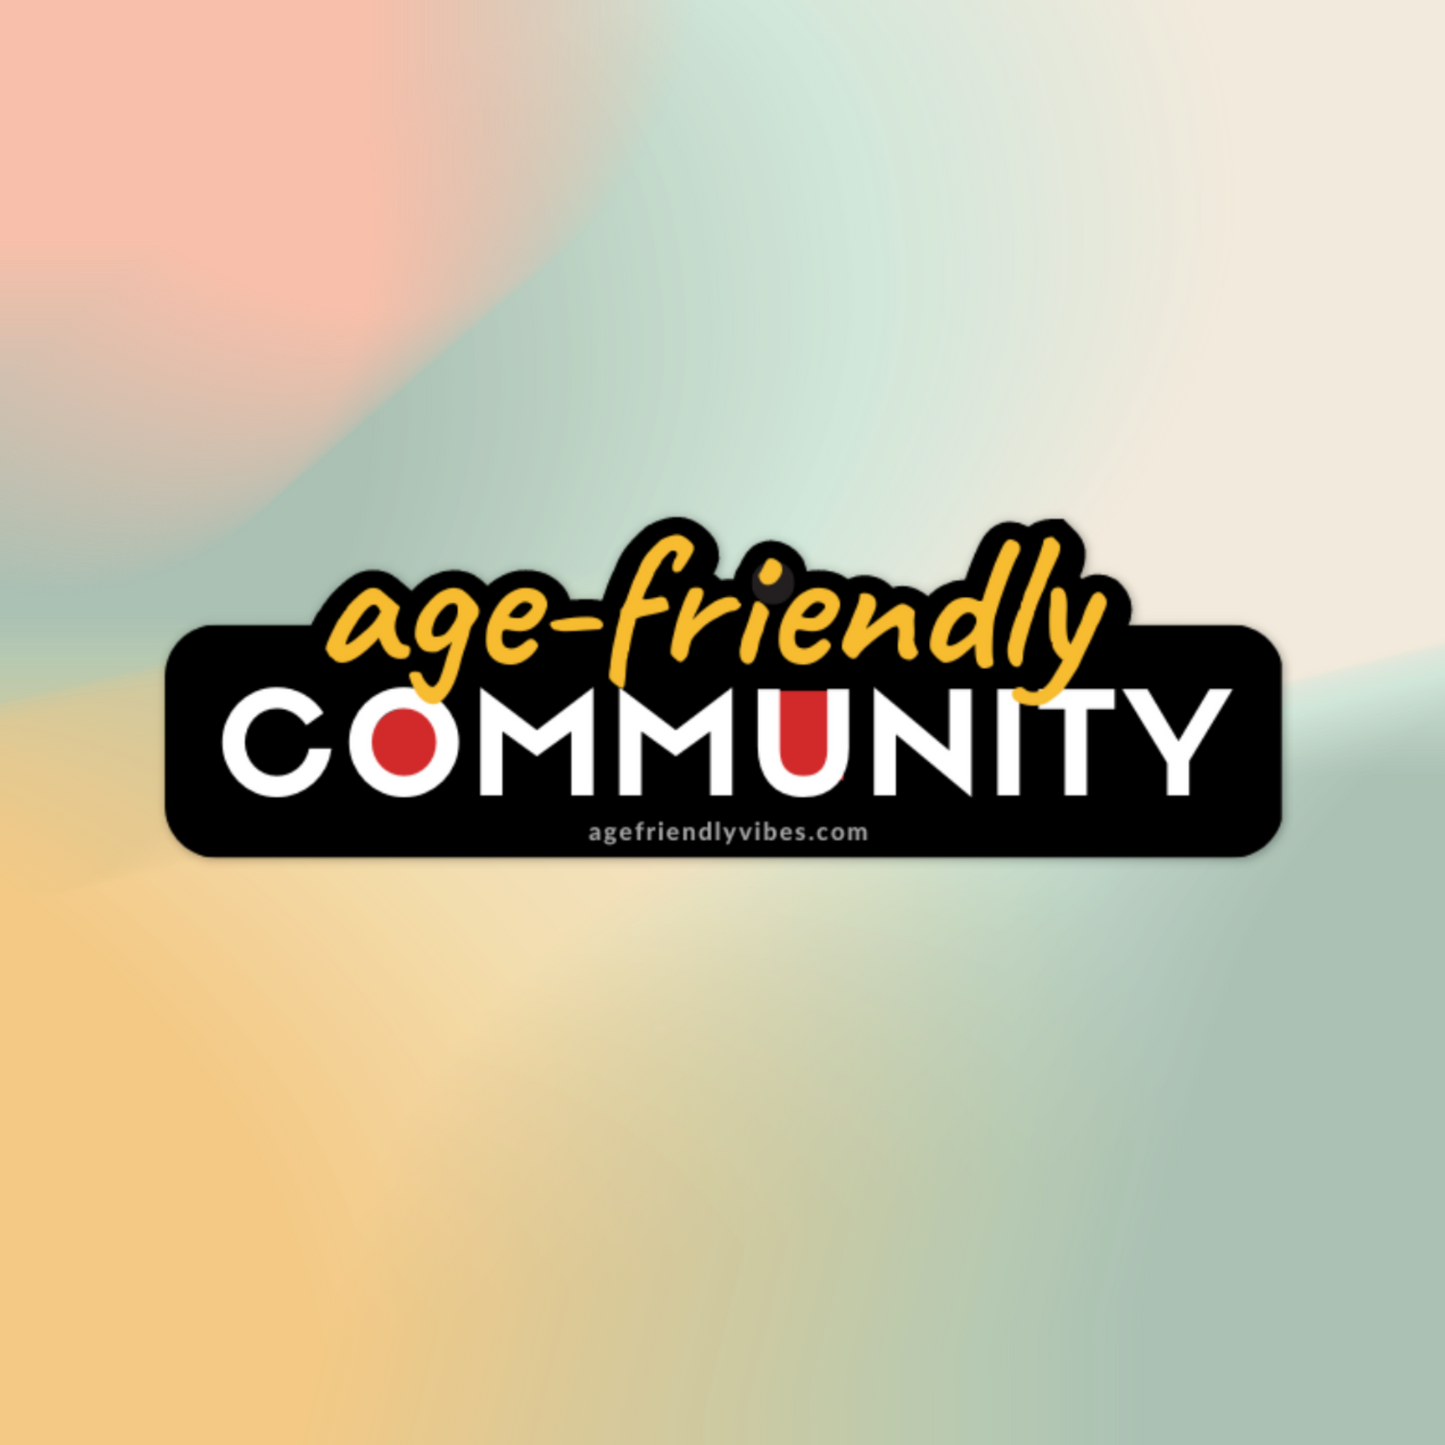 Age-Friendly Community sticker